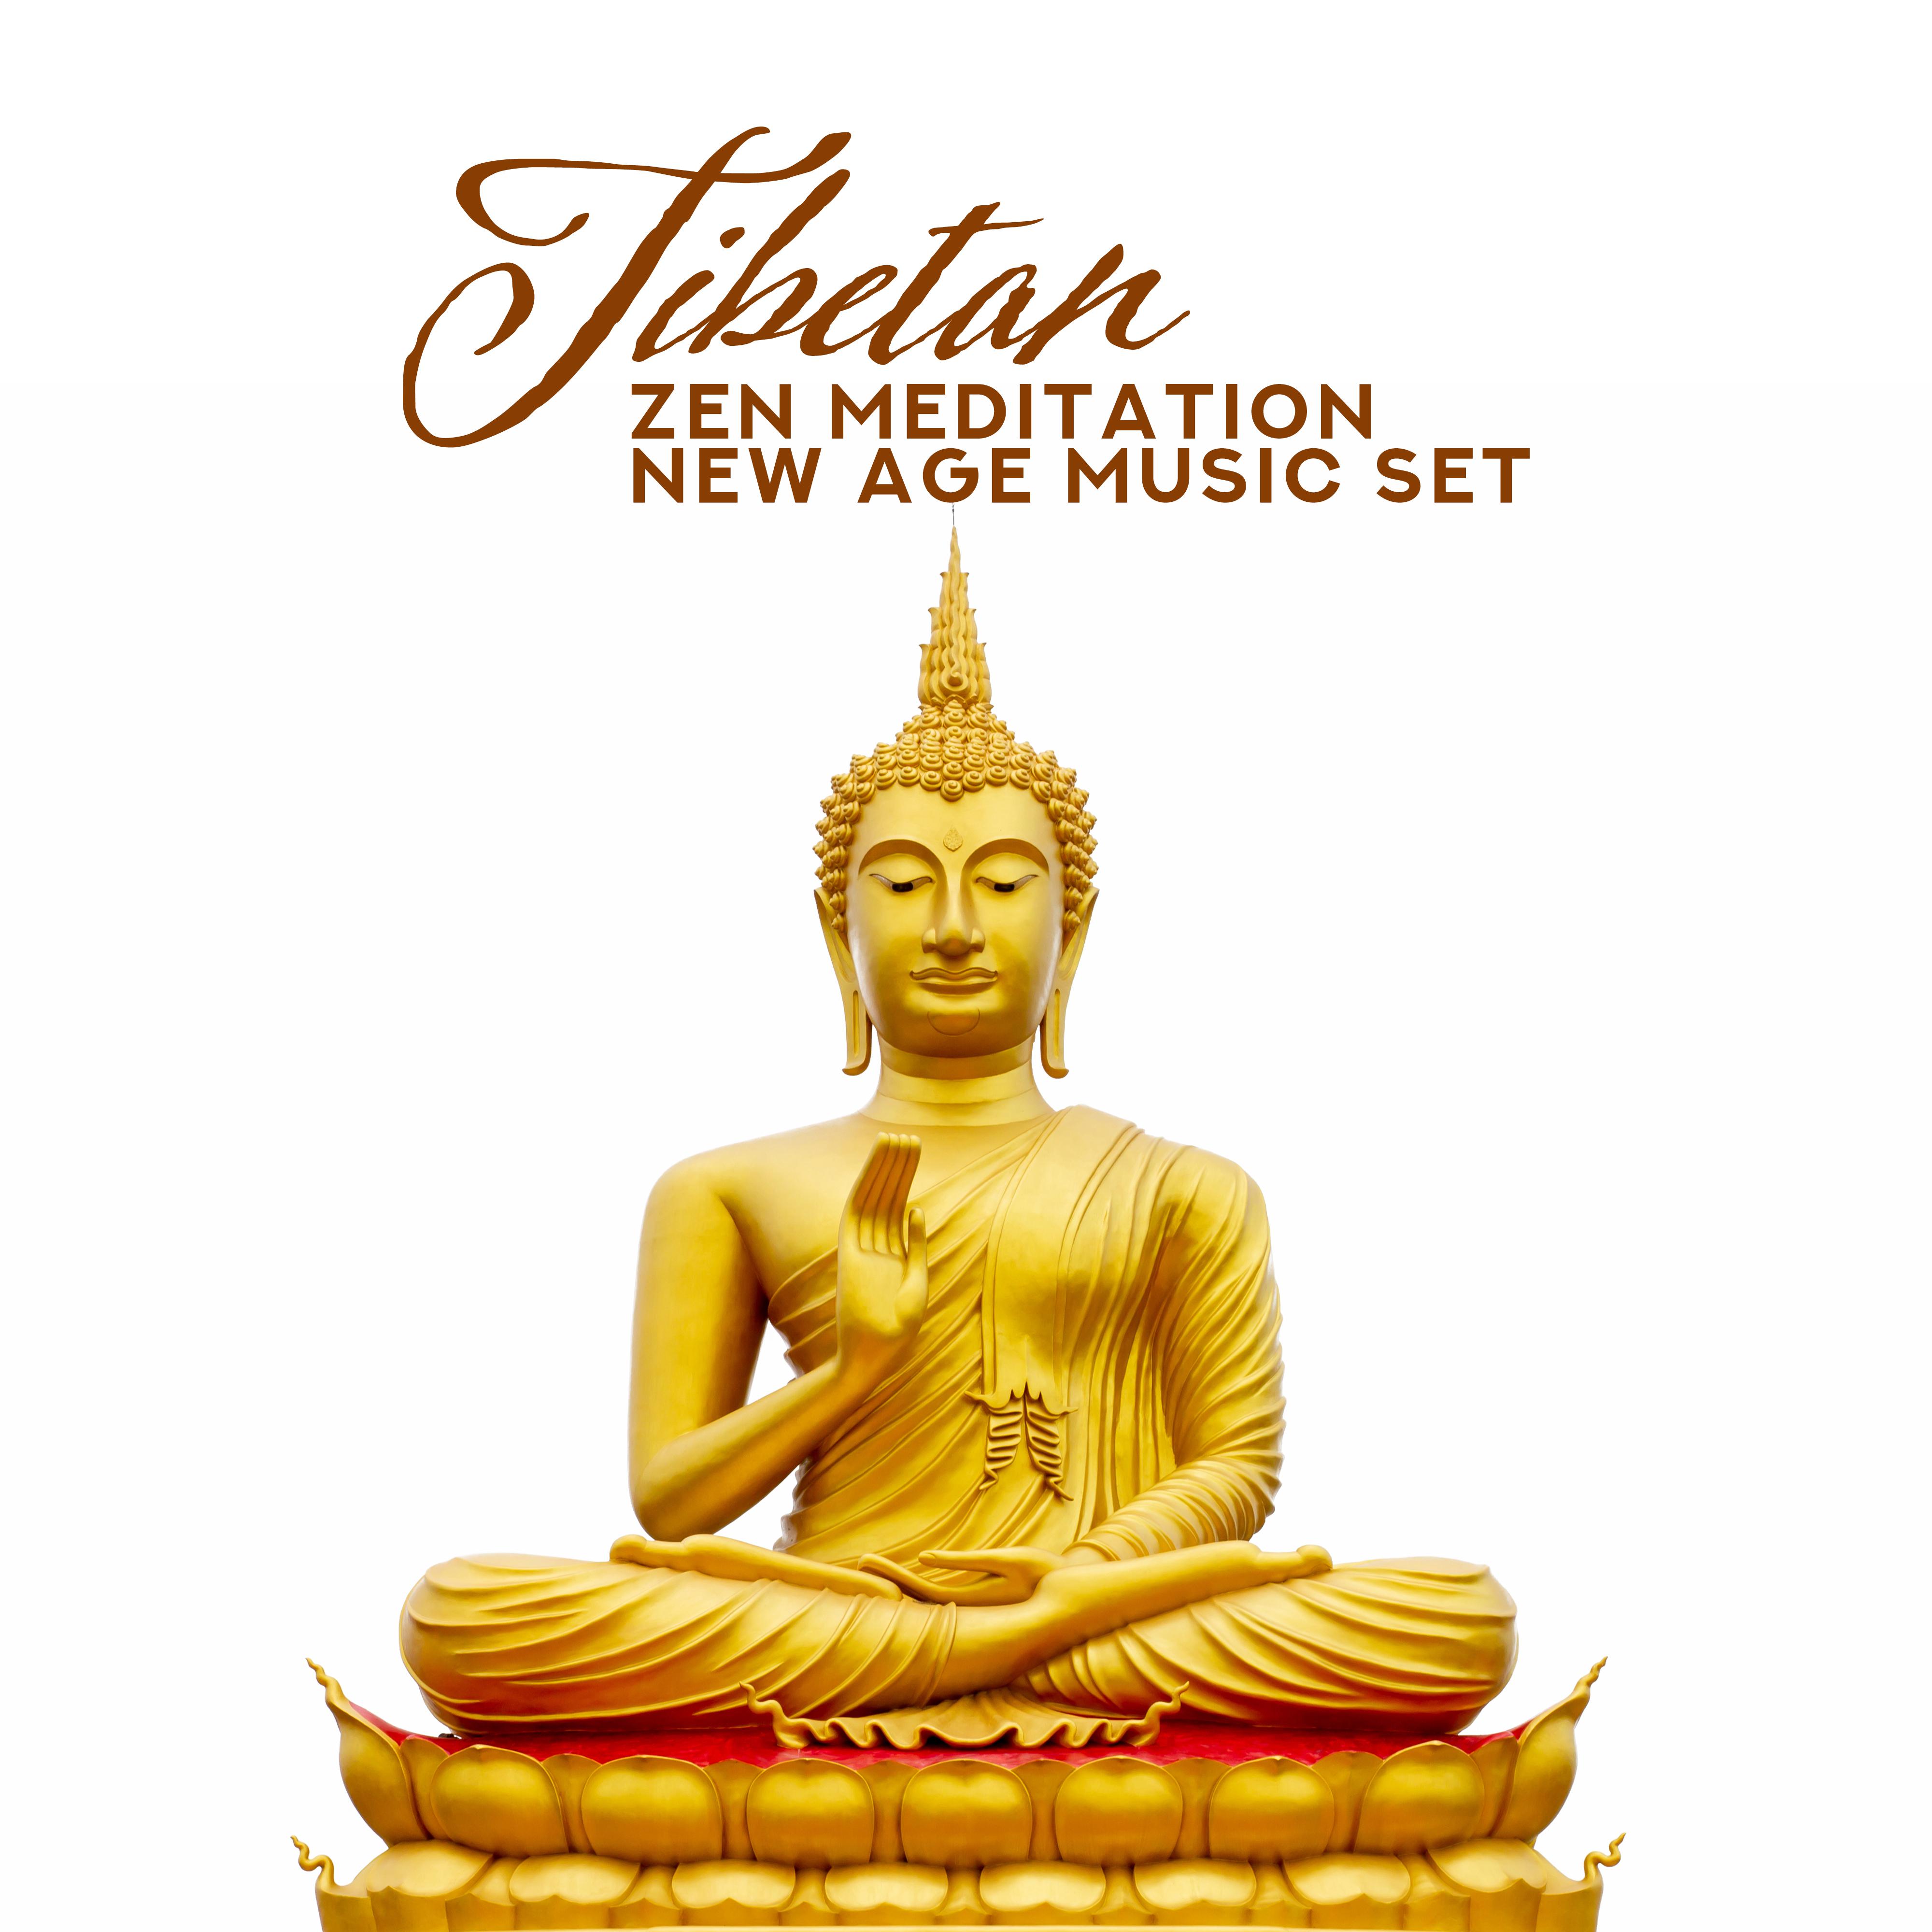 Tibetan Zen Meditation New Age Music Set